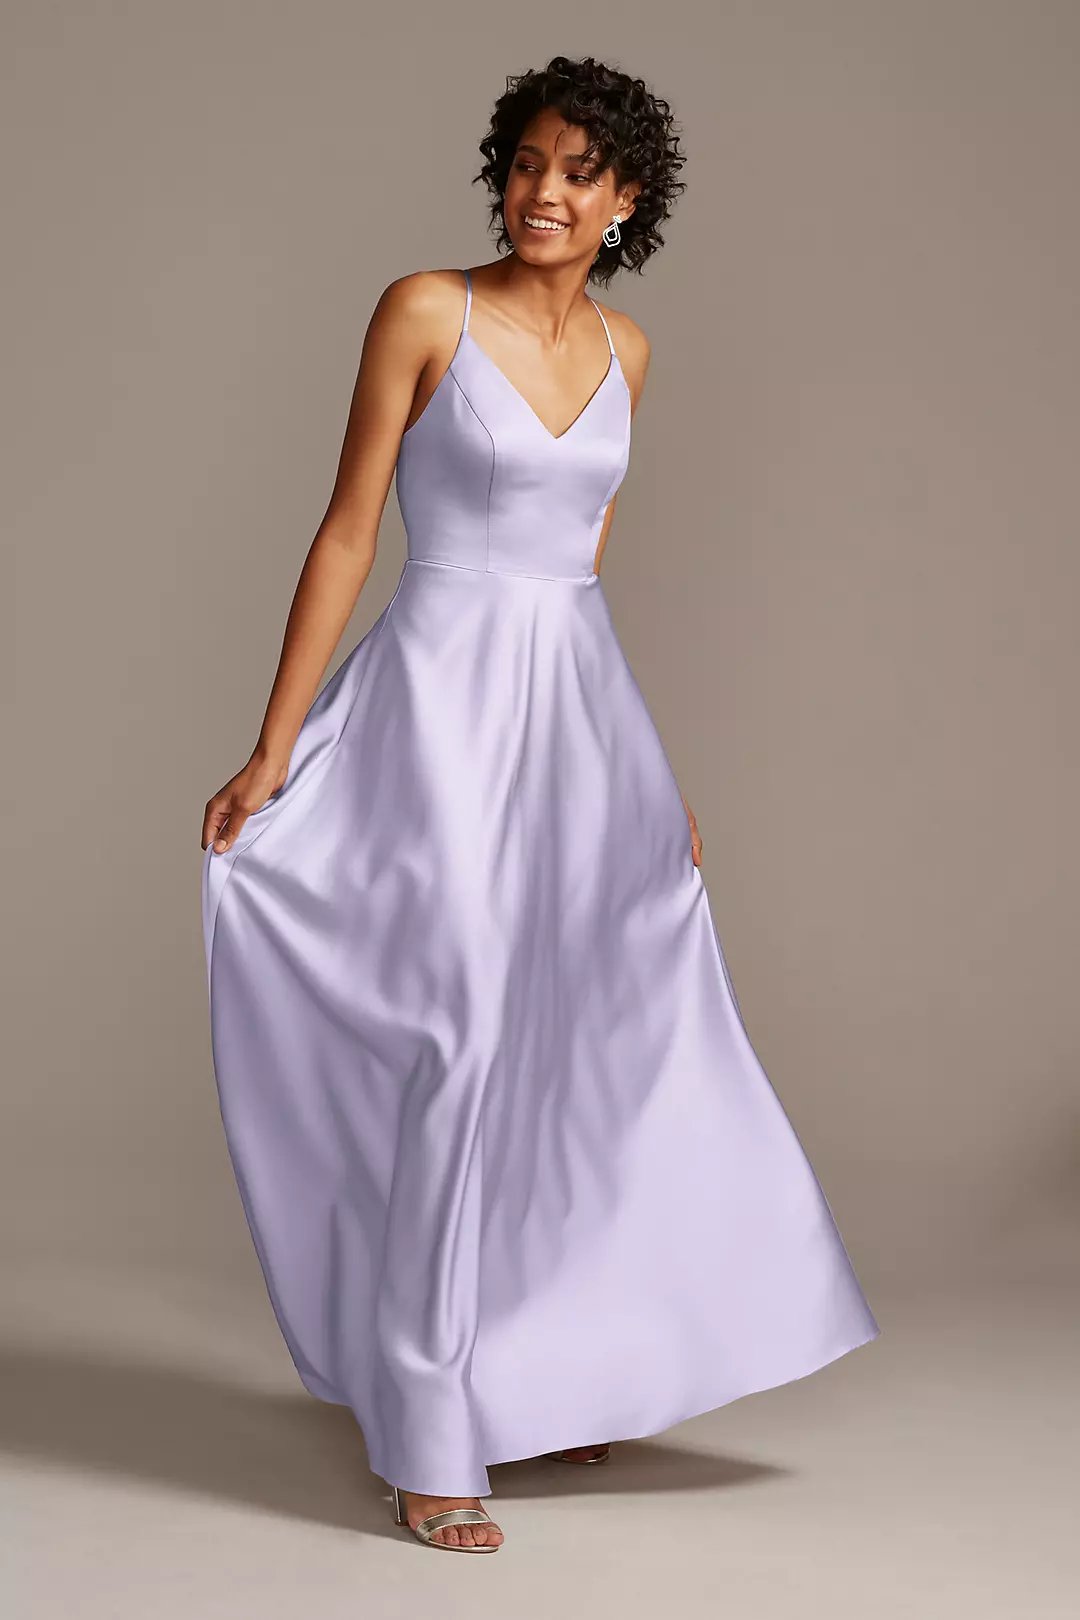 Satin Lining Fabric 4531, Dress Fabric, Bridesmaid